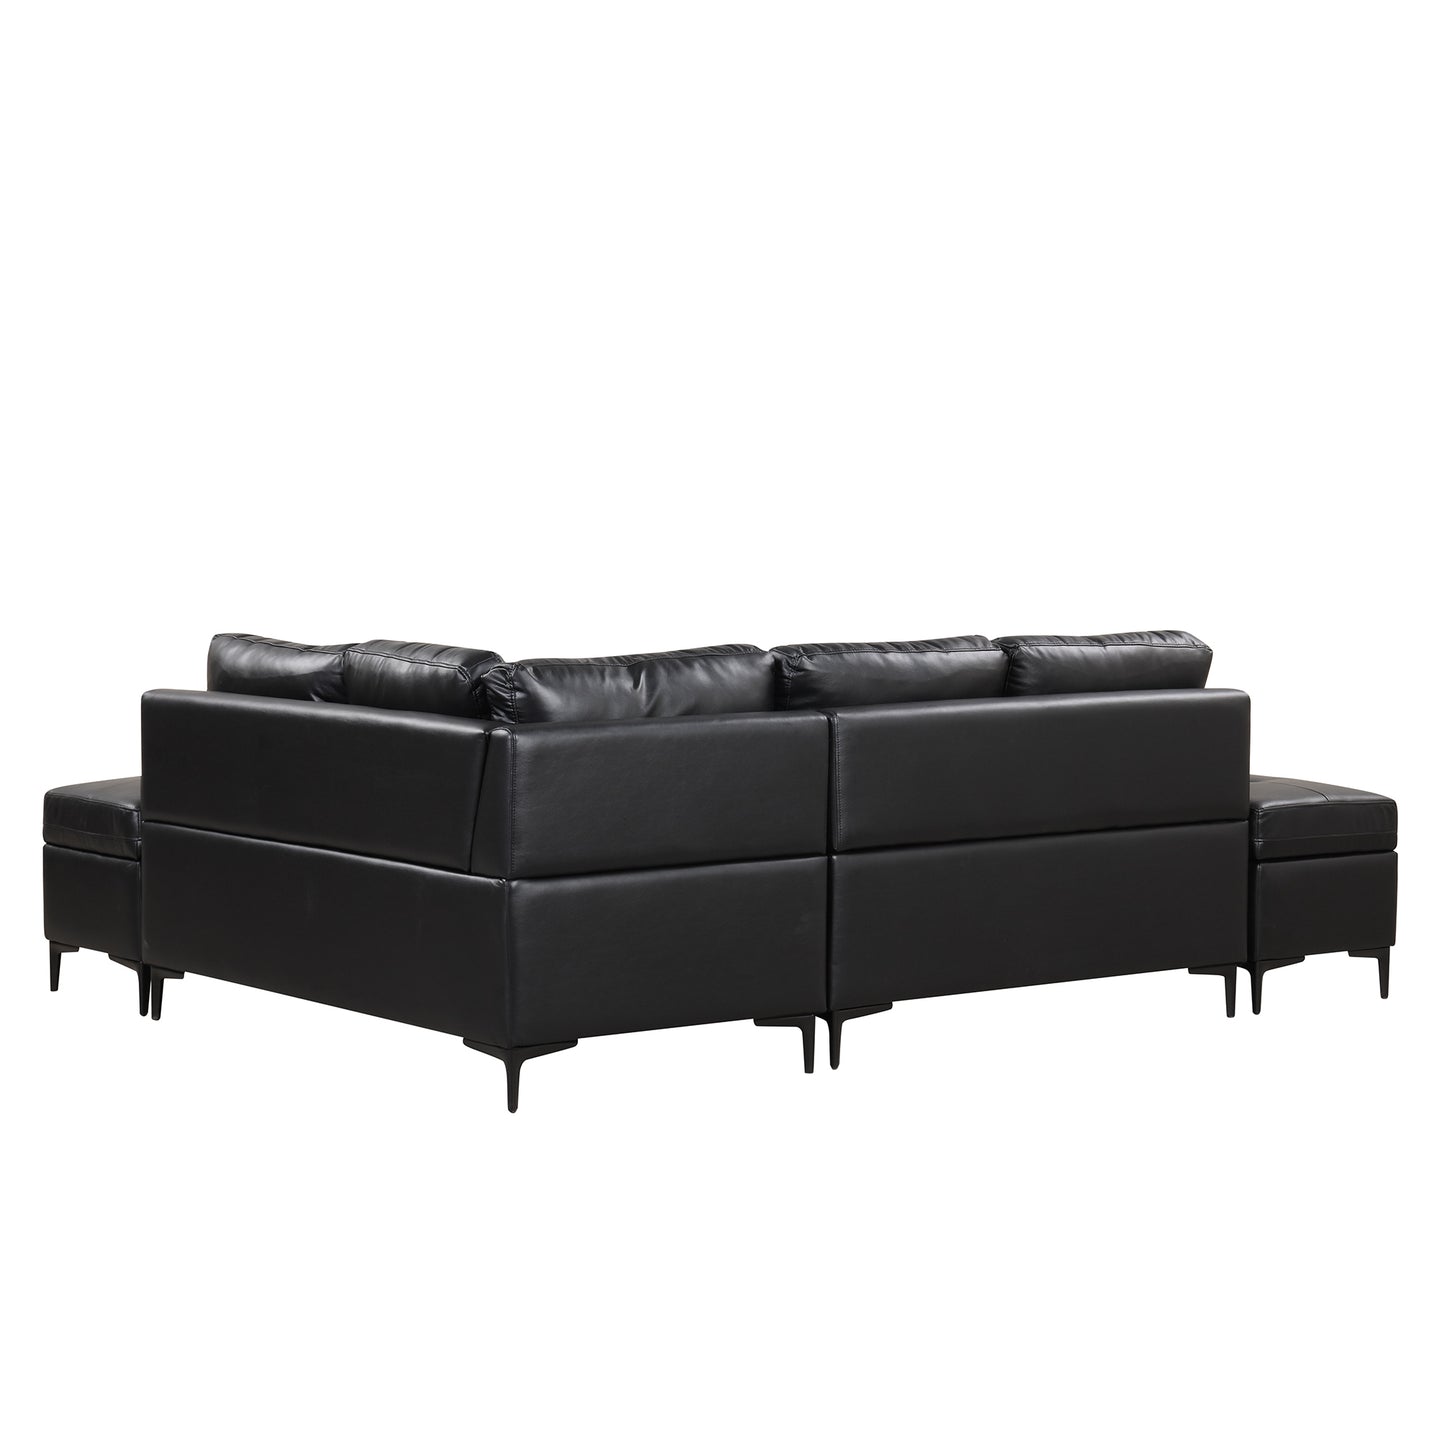 94.88" L-Shaped Corner Sofa Pu Leather Sectional Sofa